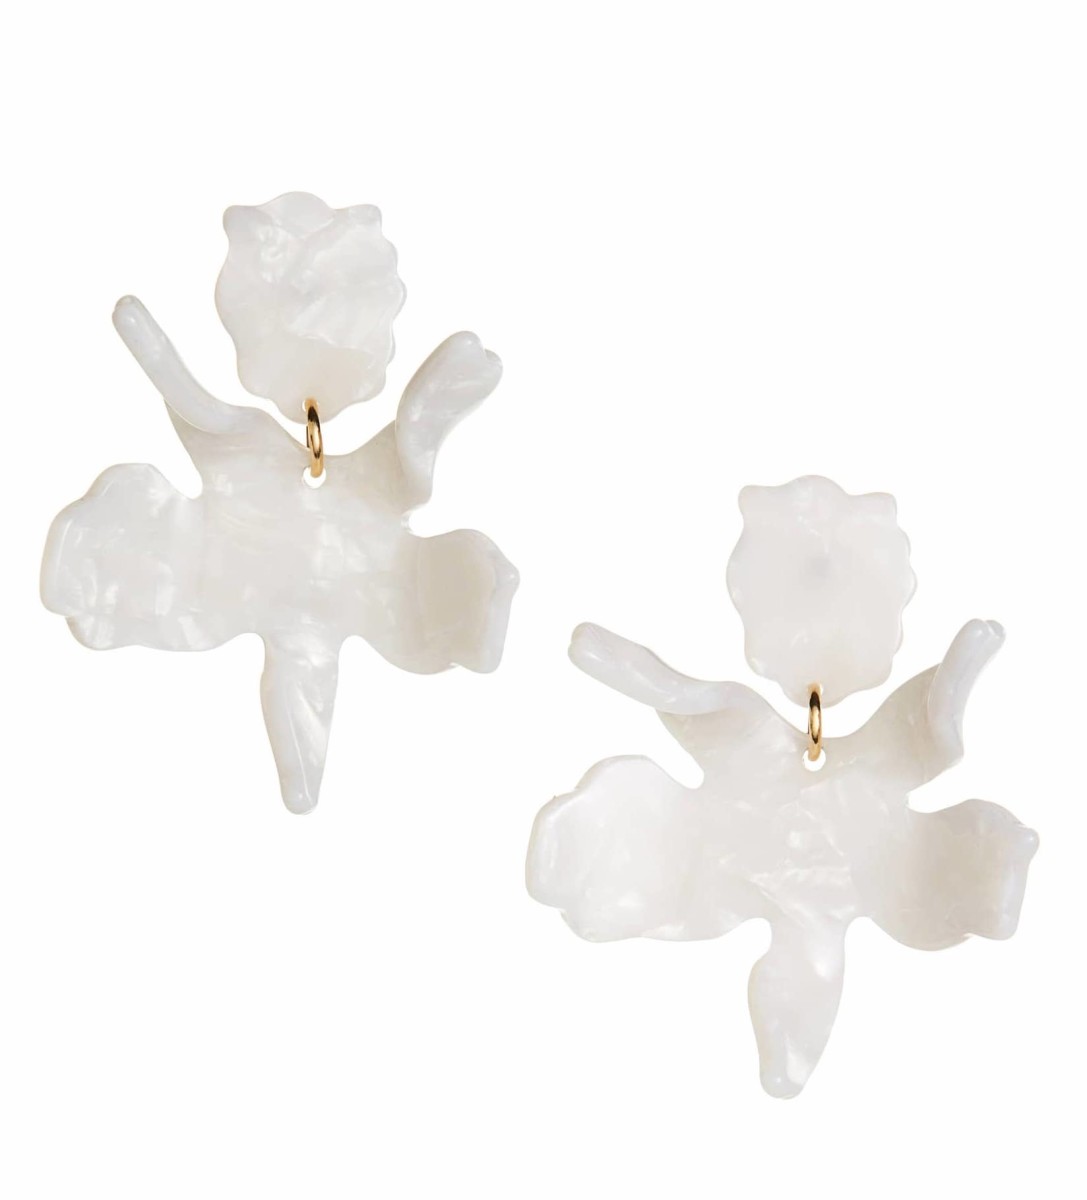 Lele Sadoughi Paper Lily Earrings Deals, 51% OFF | www.vetyvet.com